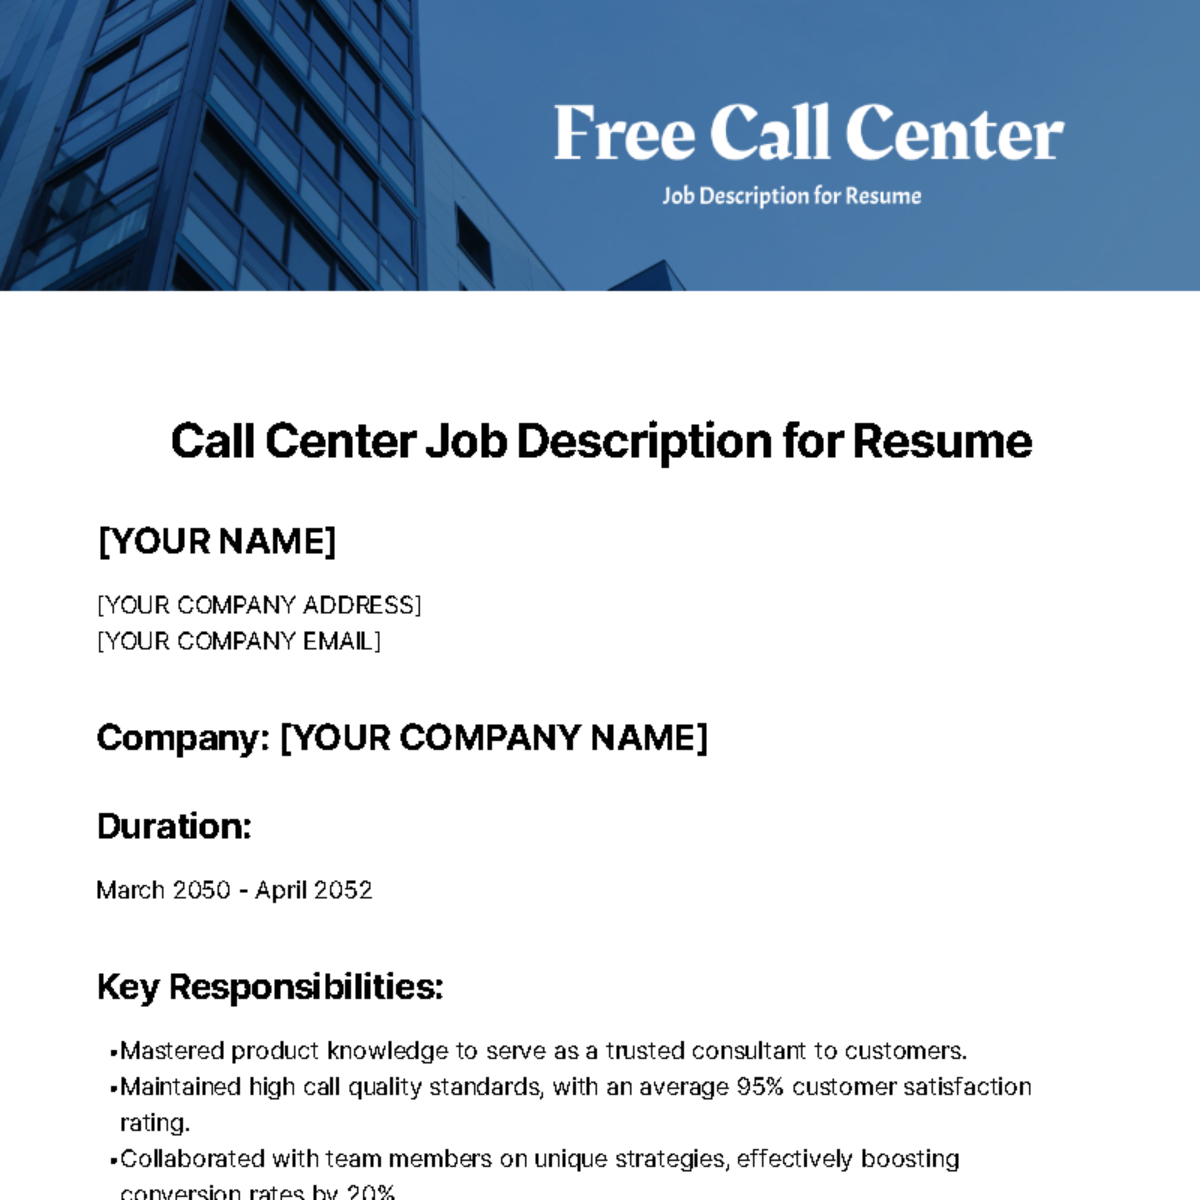 Call Center Job Description for Resume Template